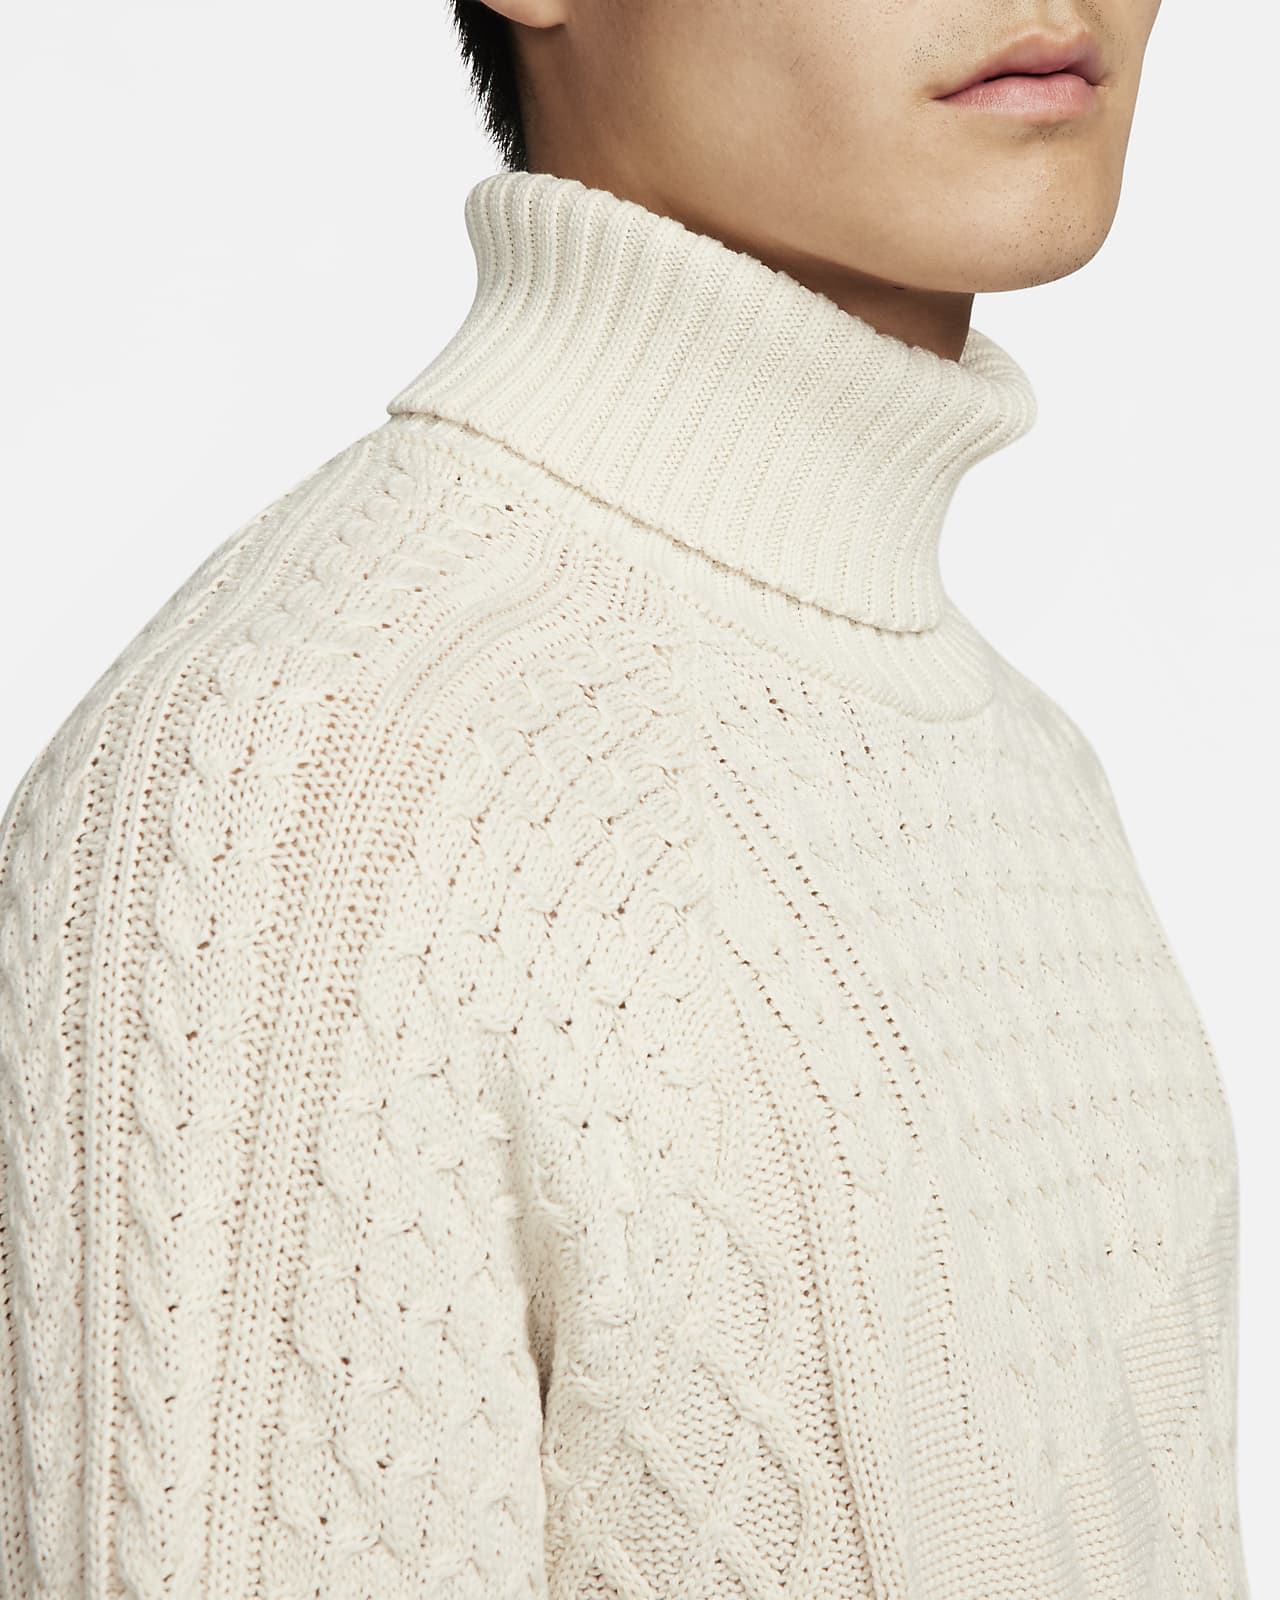 NIKE cable knit sweater ケーブルニット セーター S